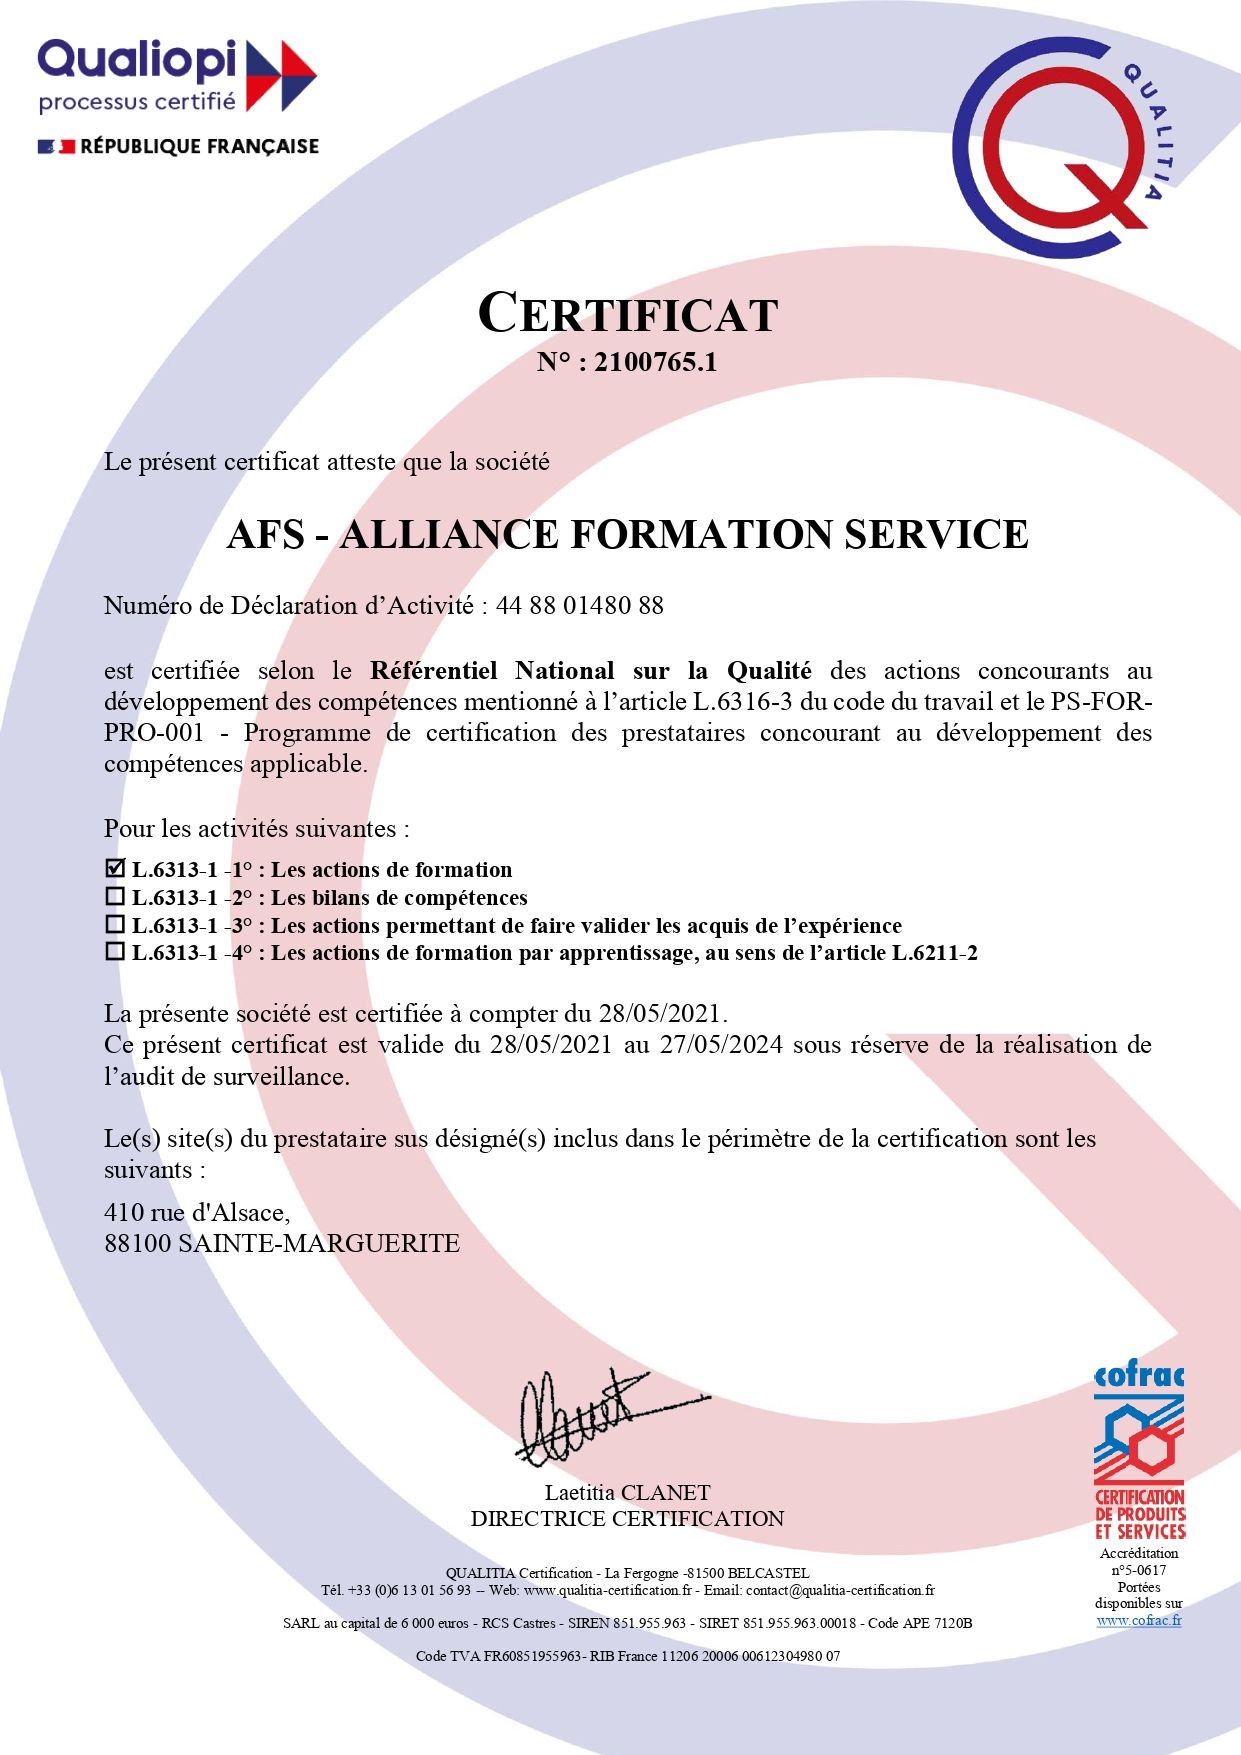 Alliance Formation Service - Certification Qualiopi